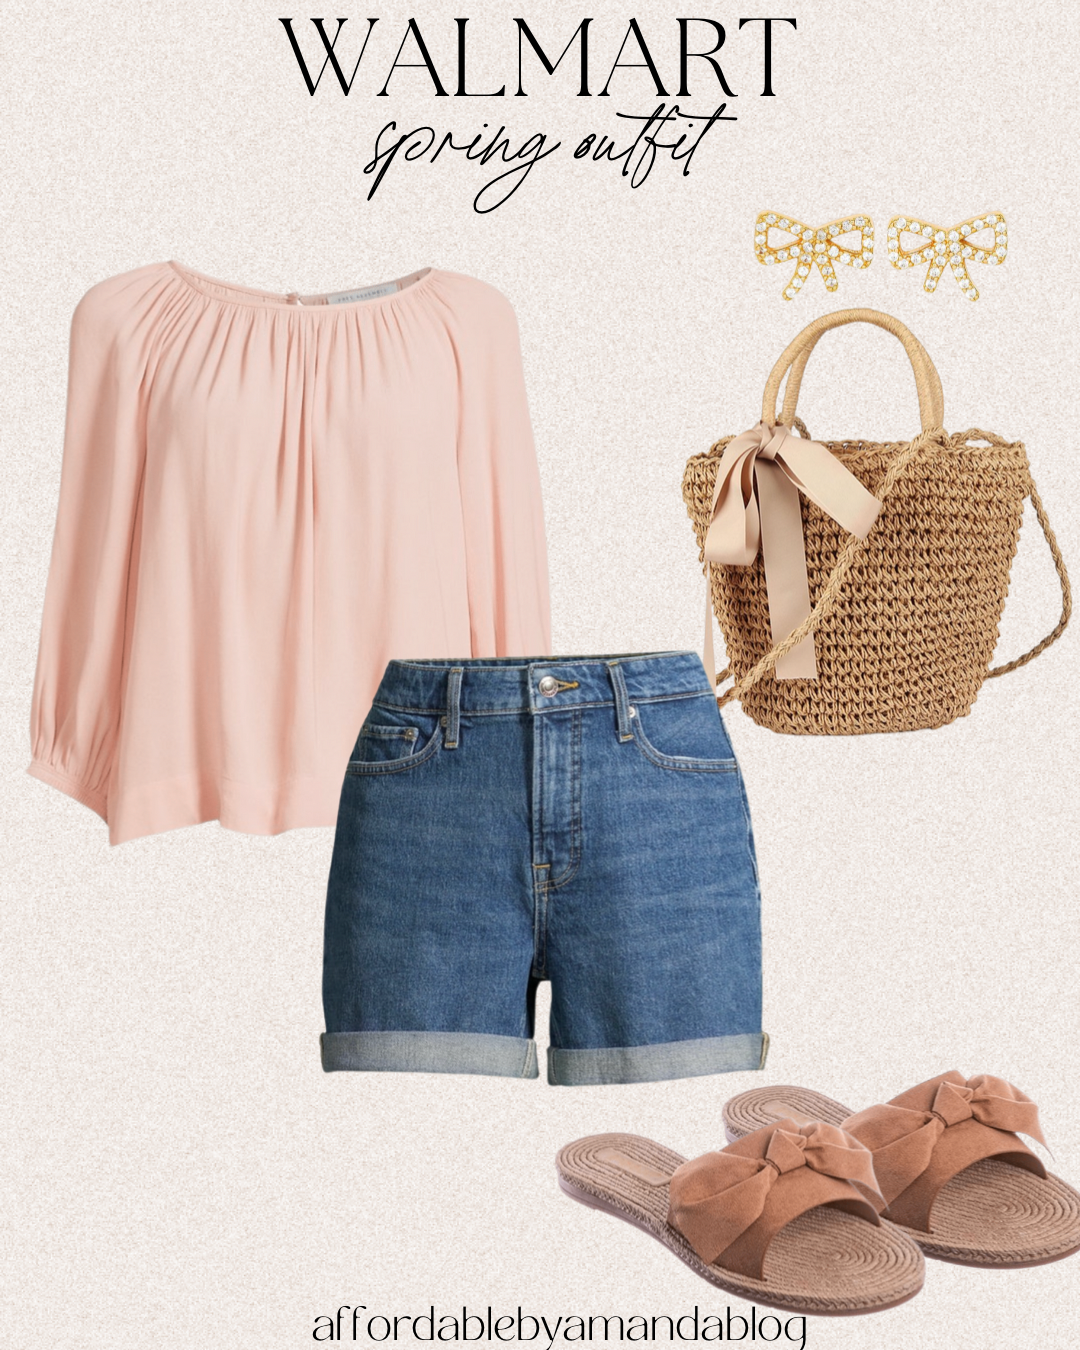 Pink top, denim shorts, straw rattan bag, brown sandals